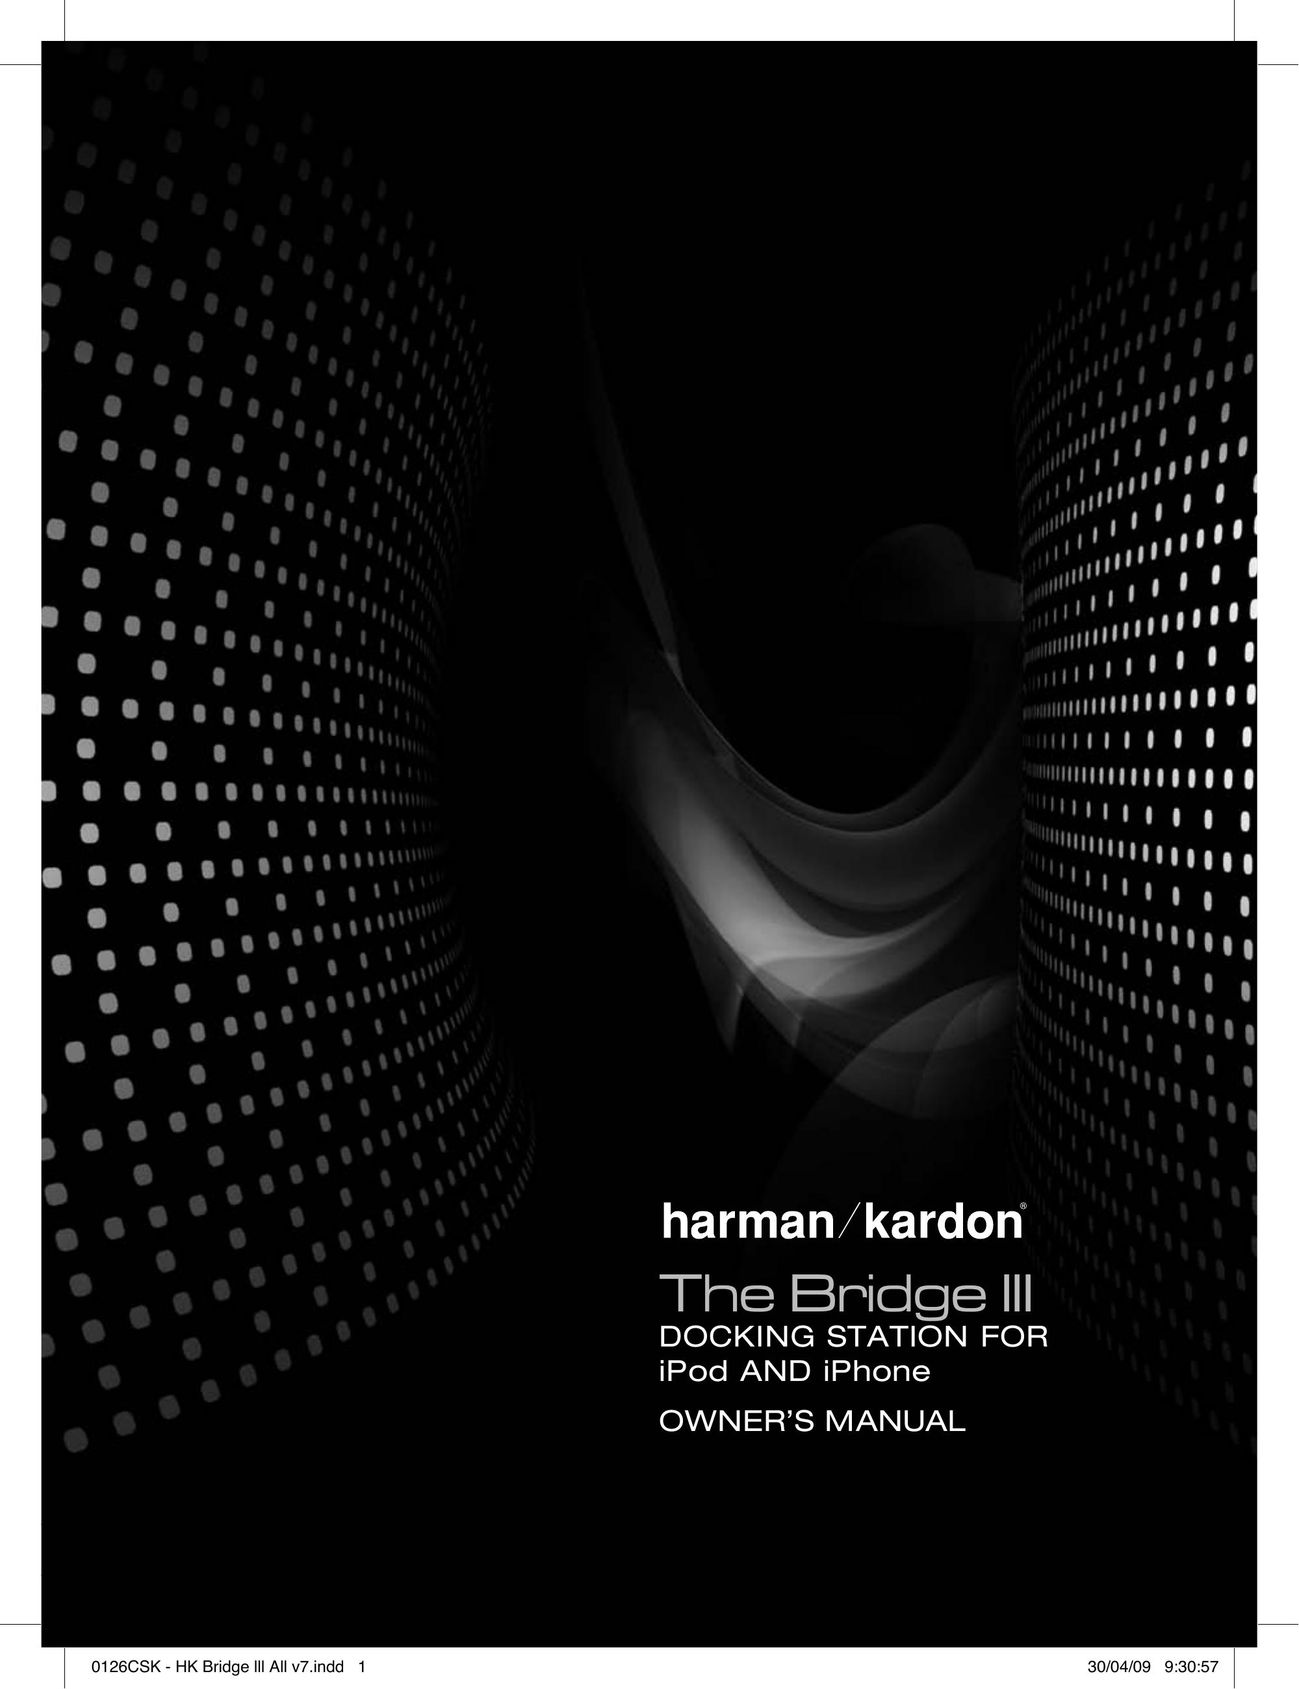 Harman-Kardon BRIDGEIII MP3 Docking Station User Manual